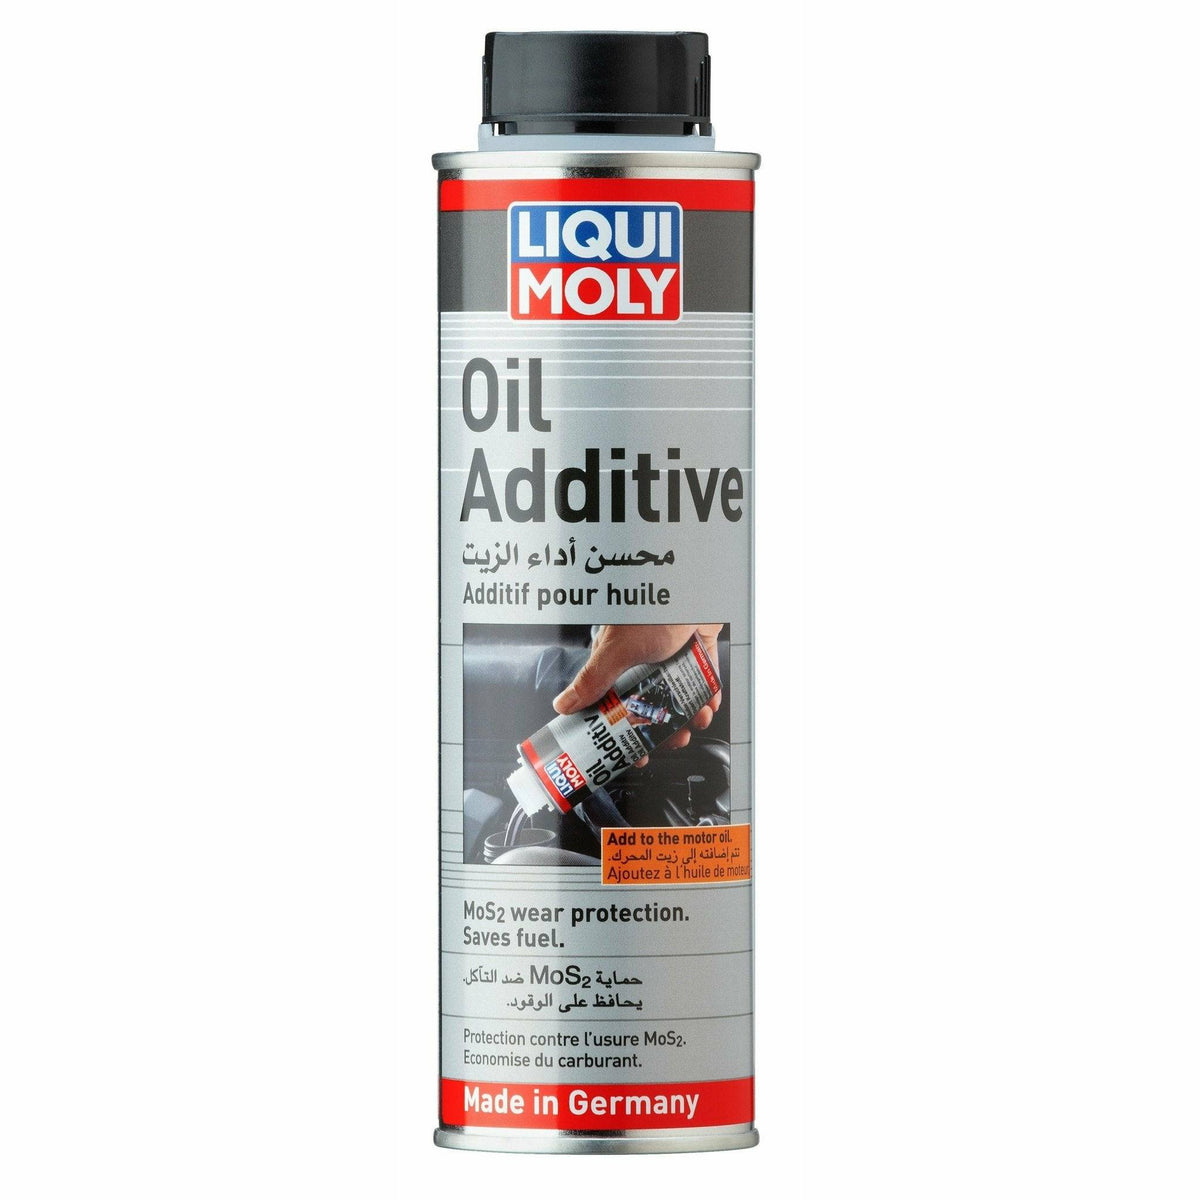  Liqui Moly Motorbike Oil Additive, 125 ml, Motorcycle Oil  additive